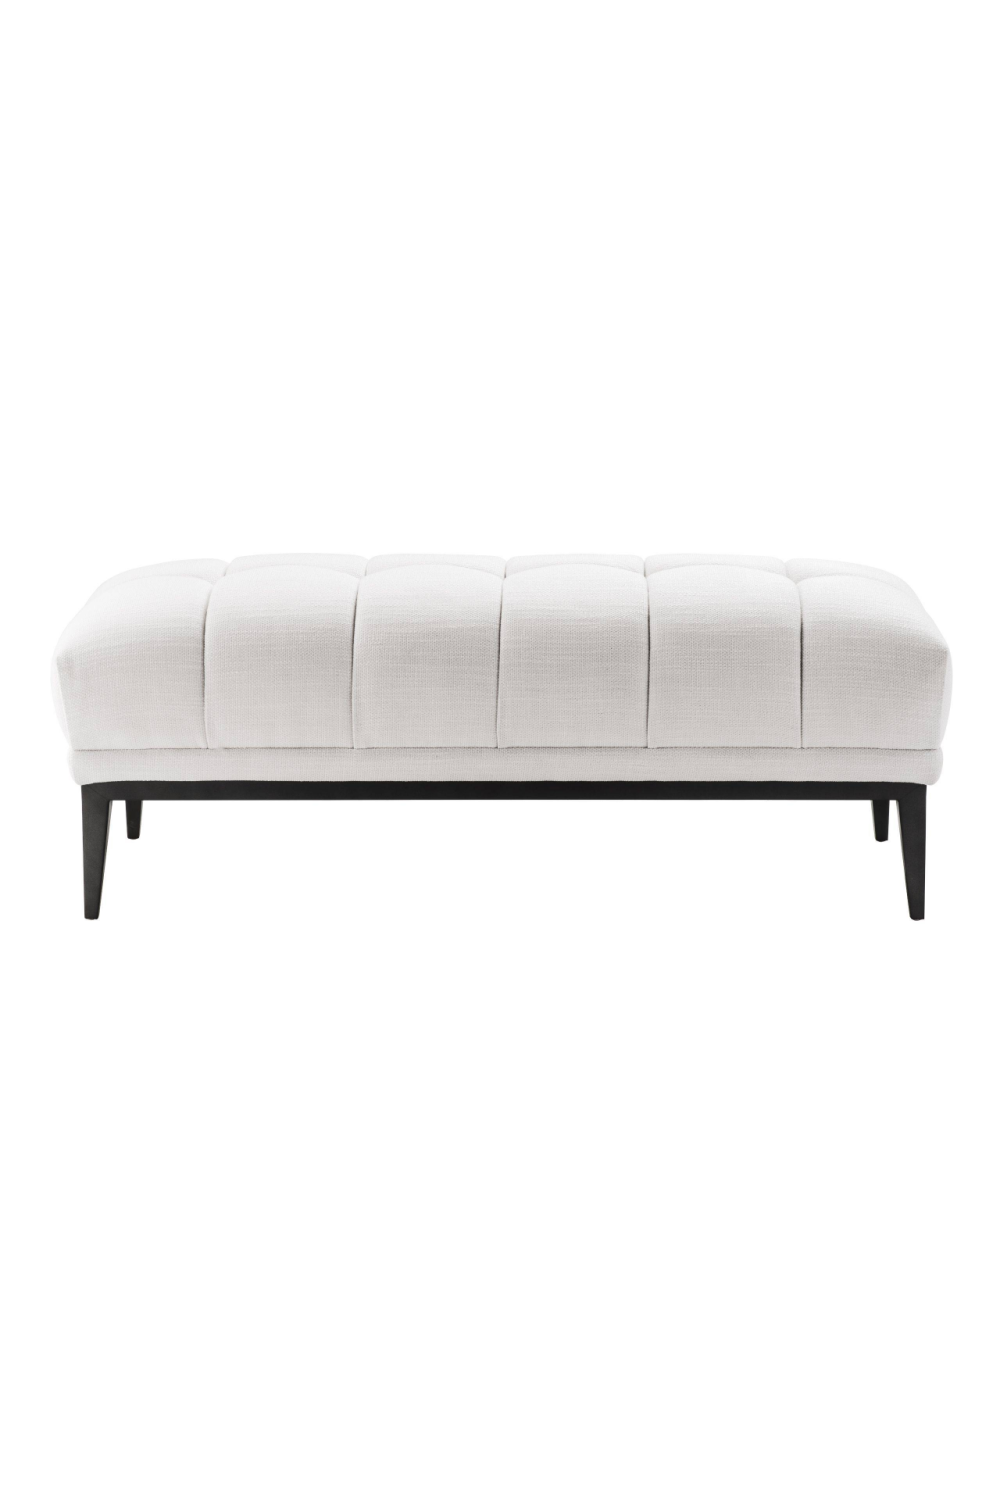 White Tufted Upholstered Bench | Eichholtz Aurelio | OROA.com